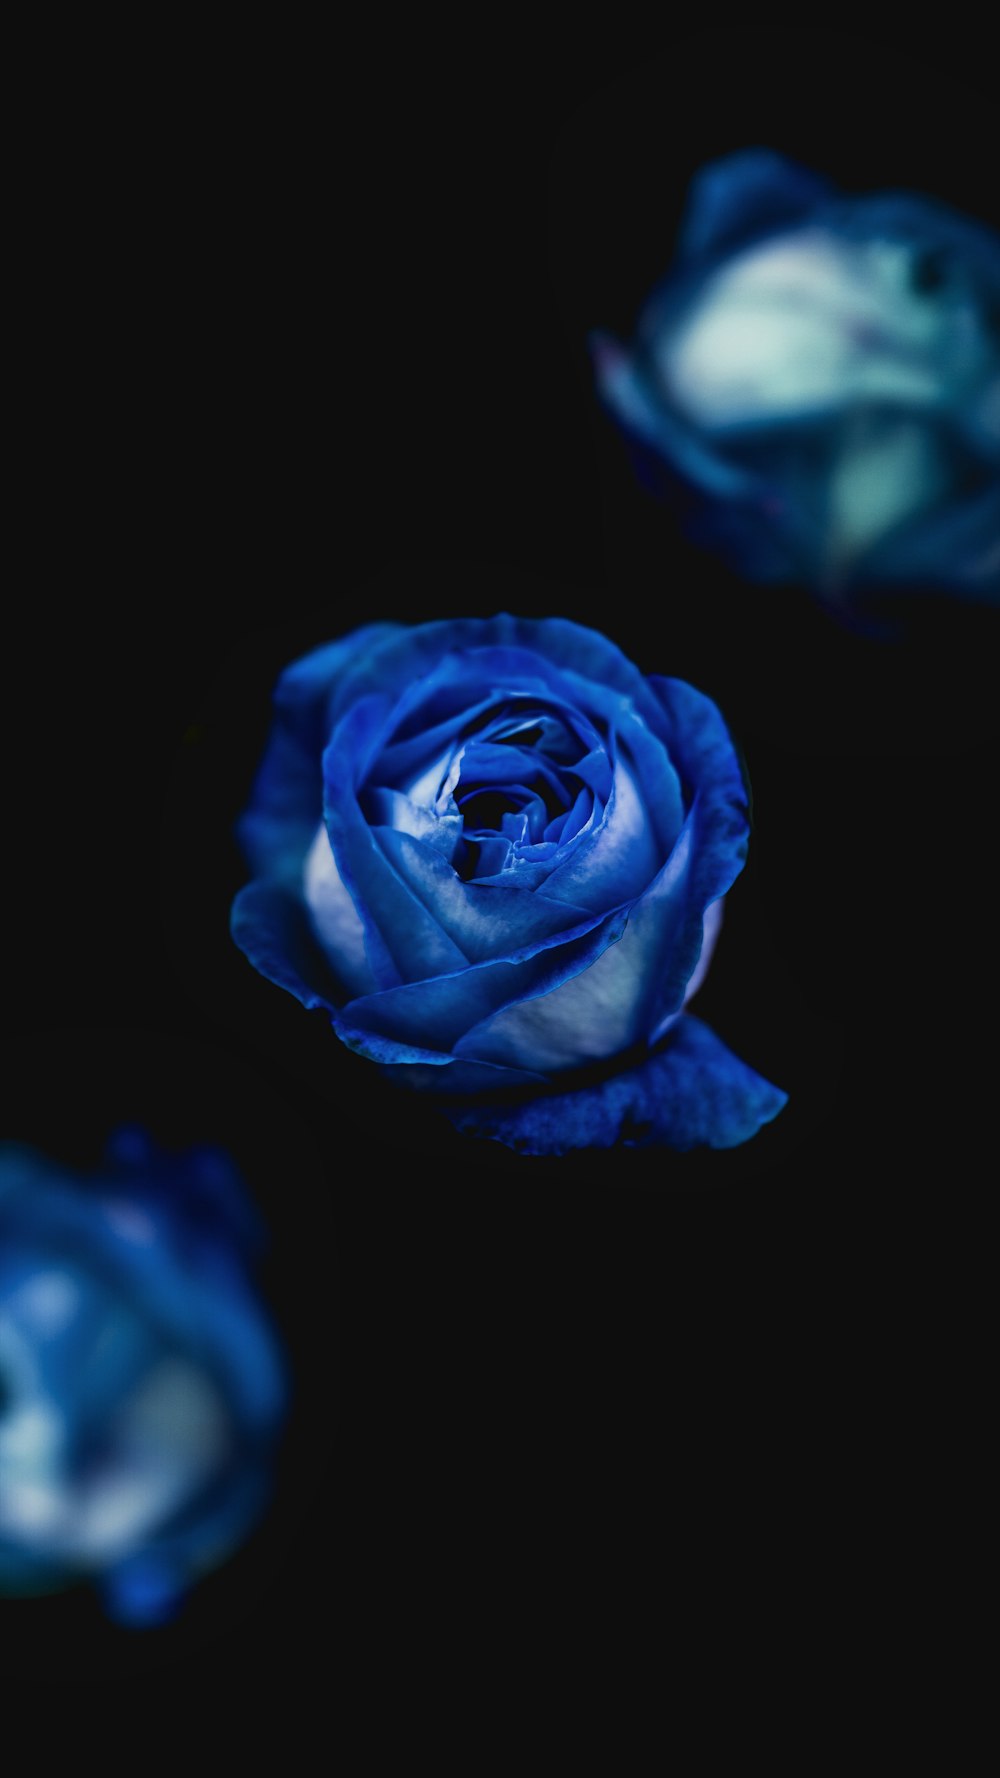 Blue Roses Pictures | Download Free Images on Unsplash